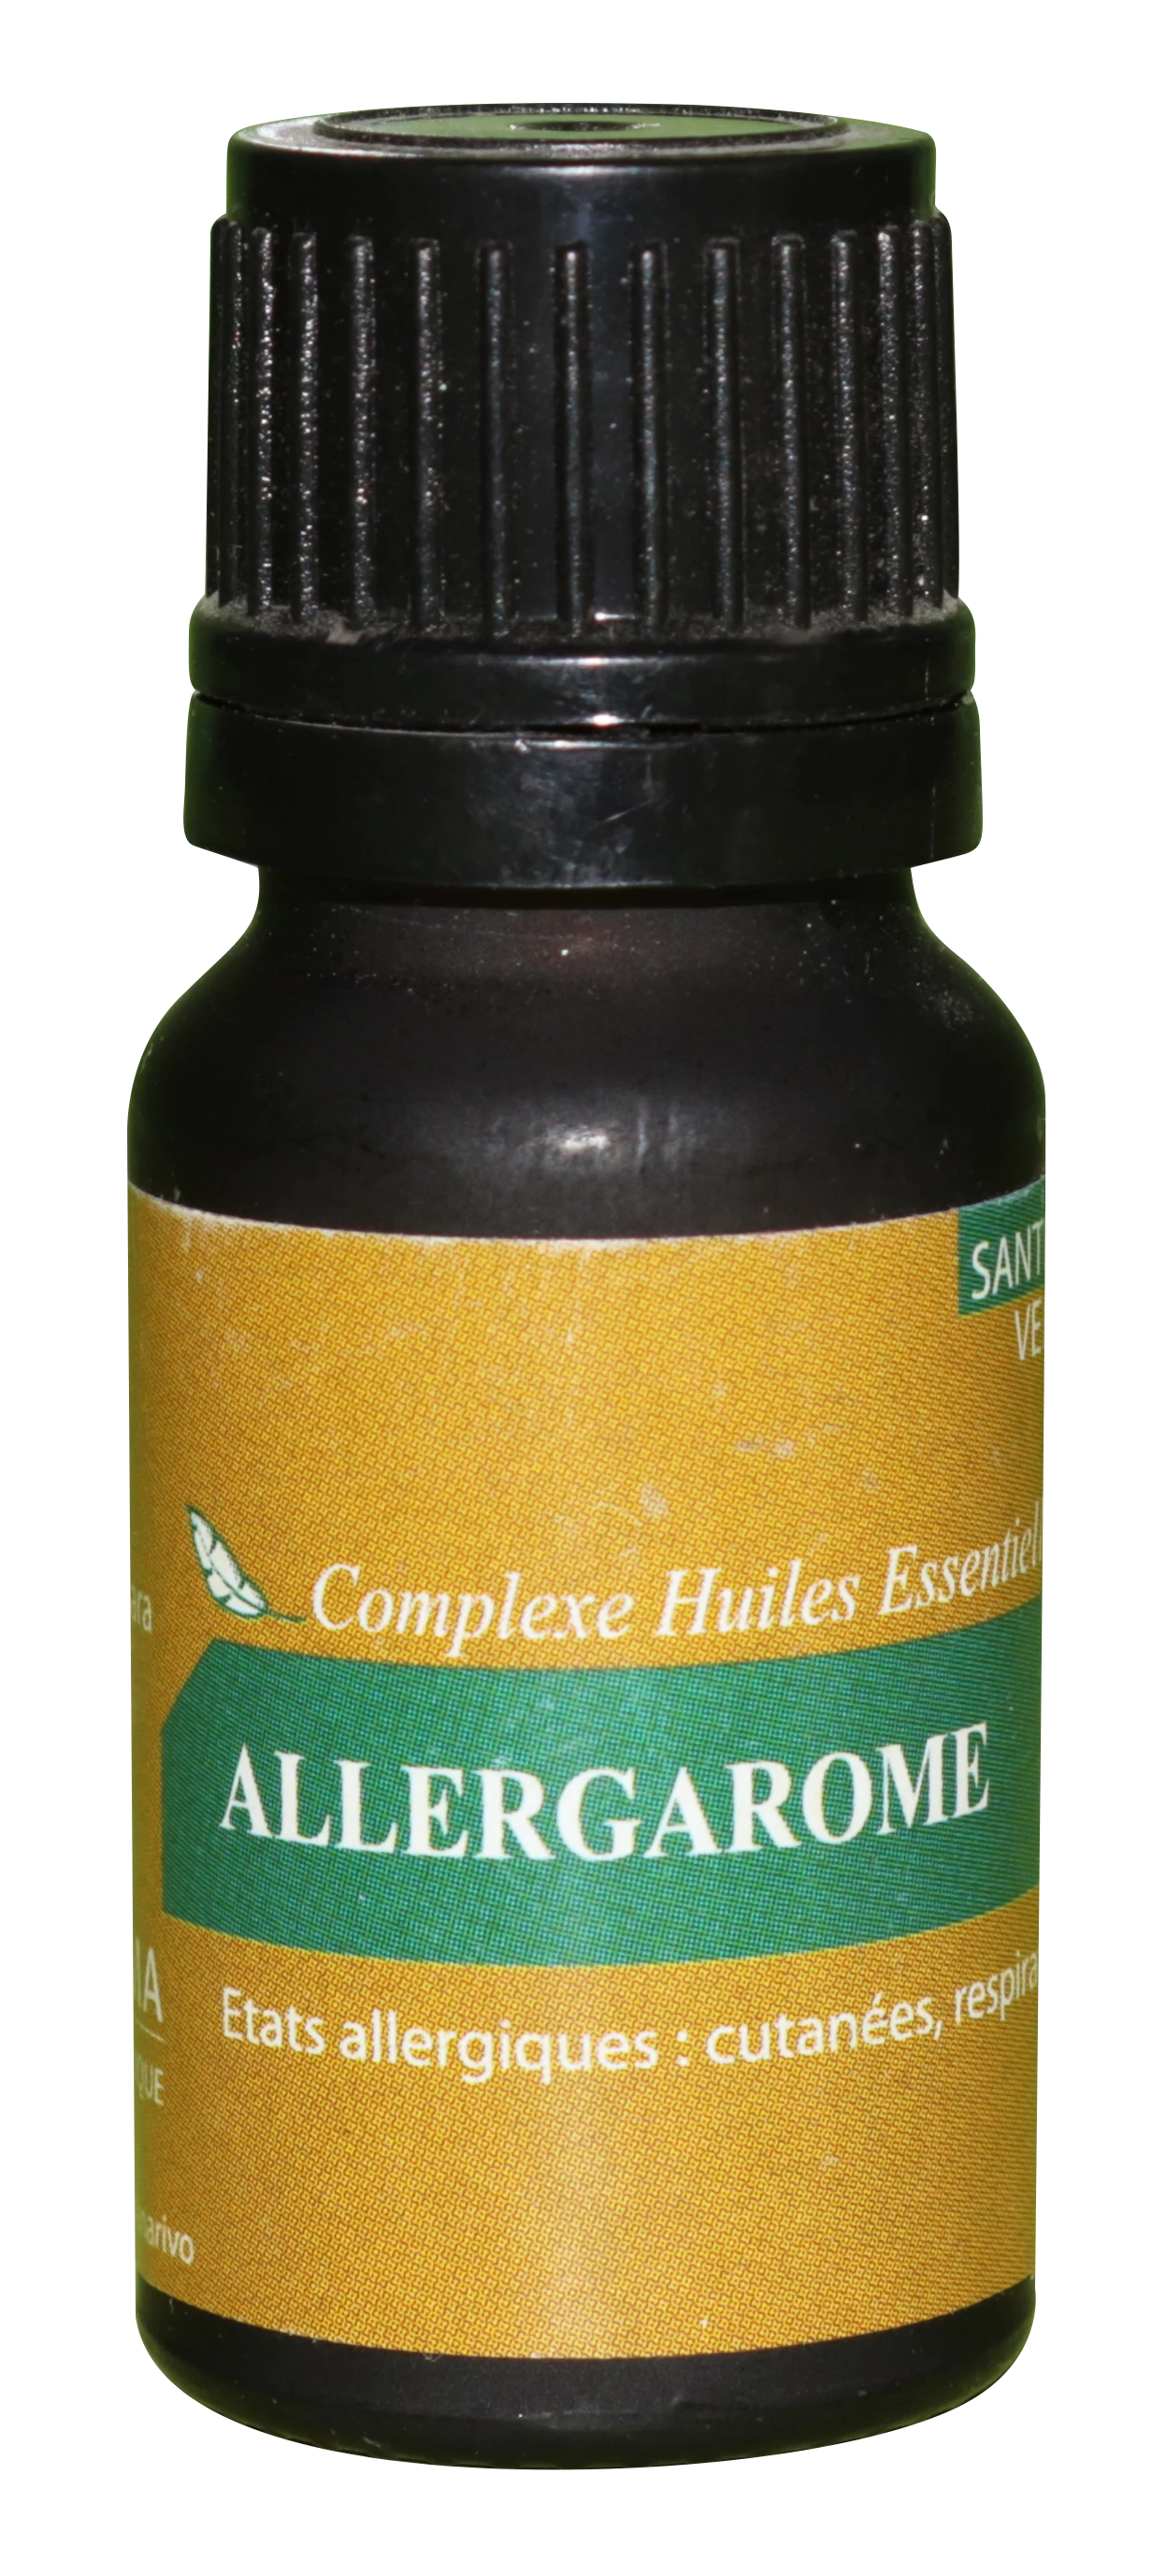 Allergarome Essential Oil Complexes 10 Ml - HOMEOPHARMA